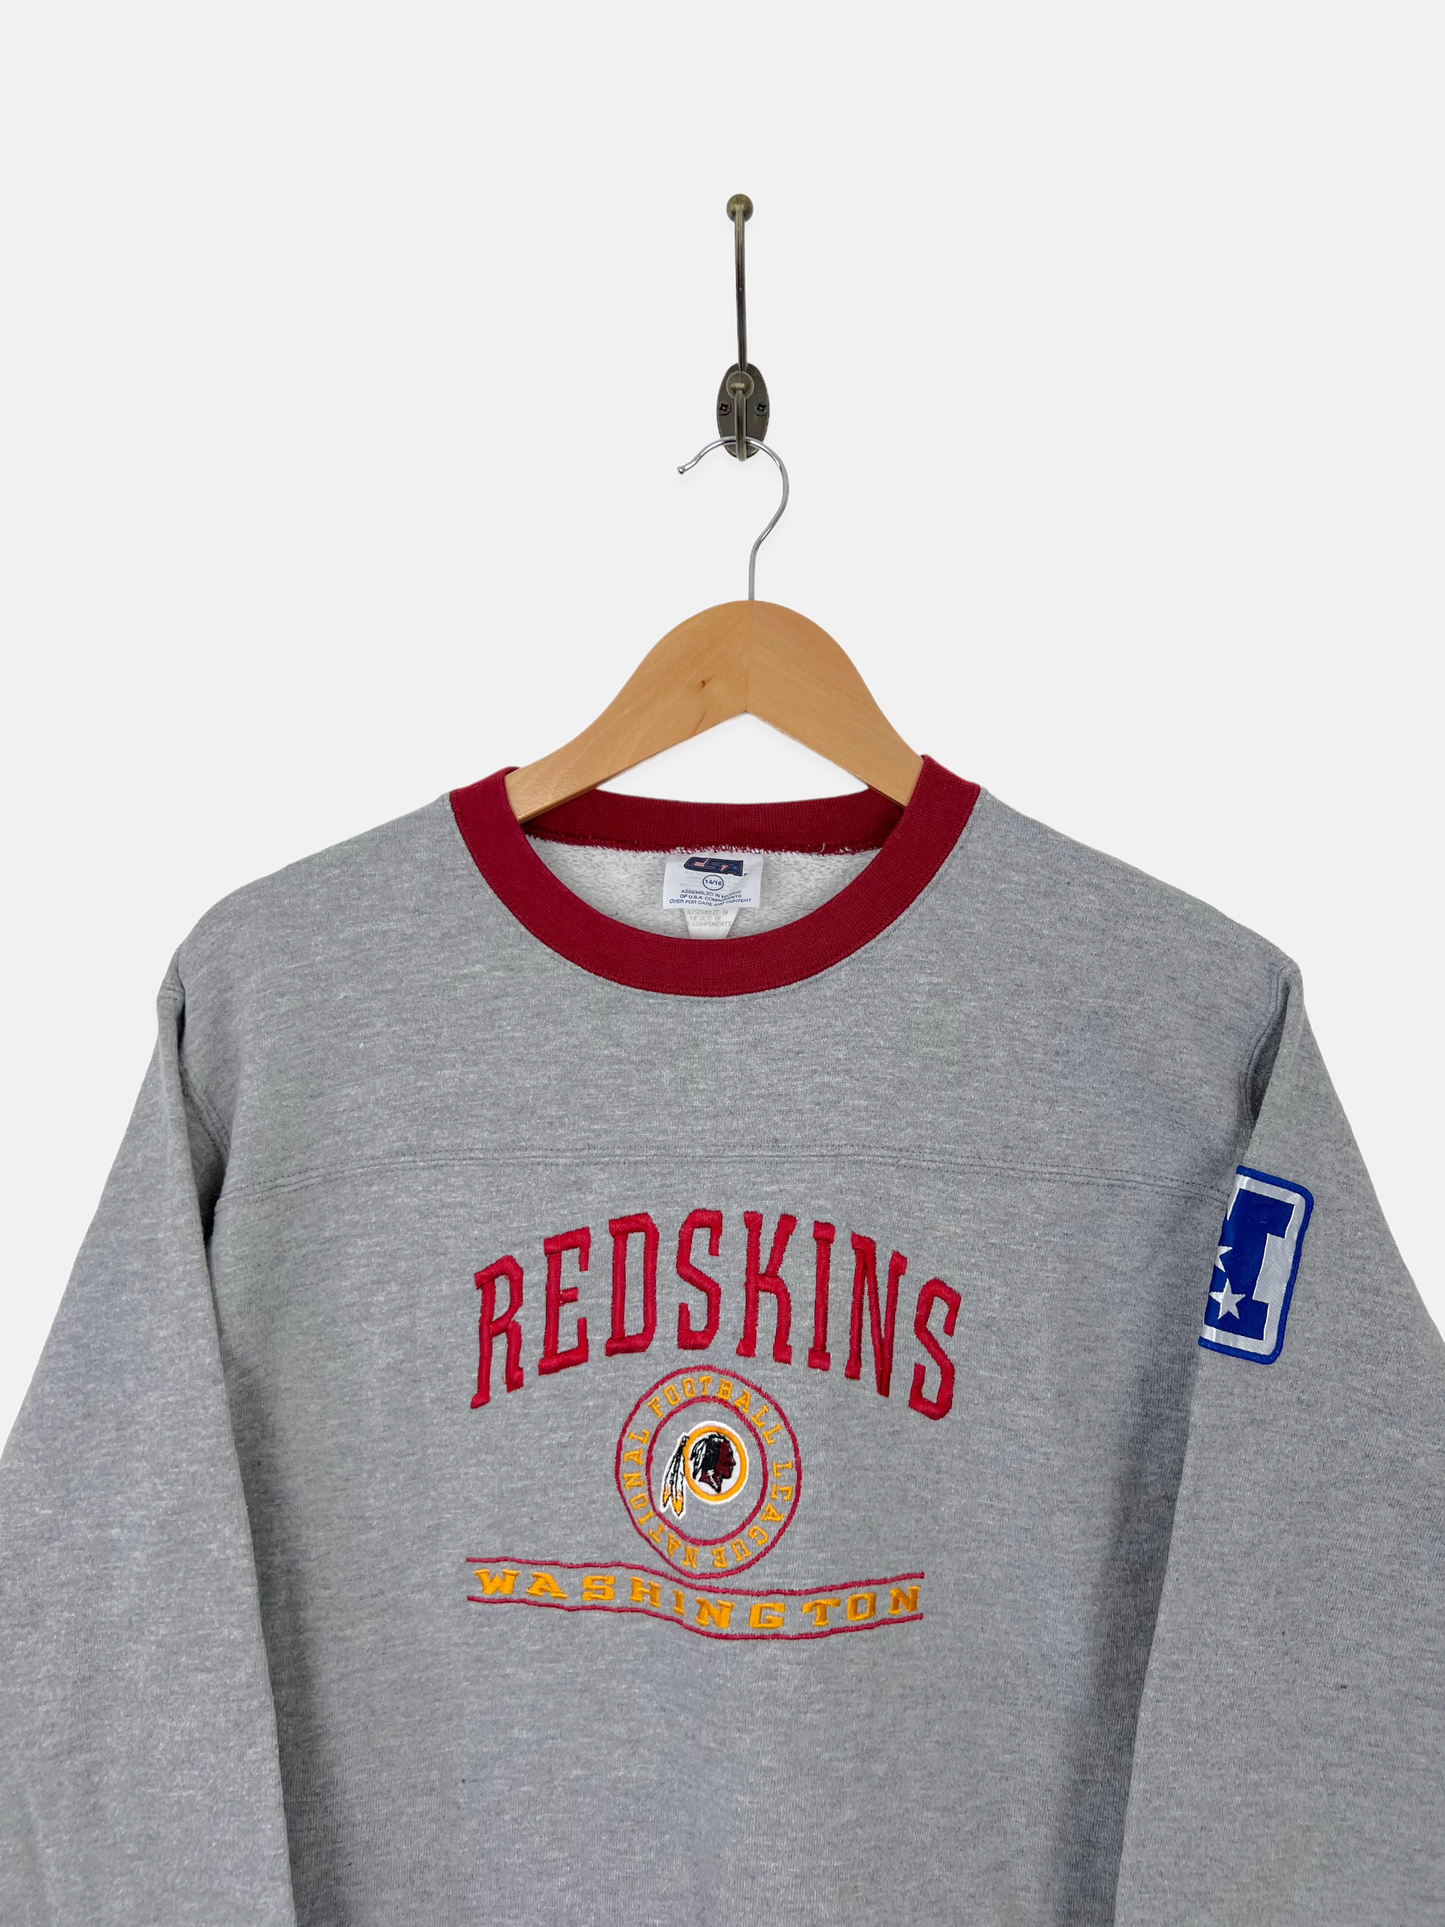 90's Washington Redskins NFL Embroidered Vintage Sweatshirt Size 4-6